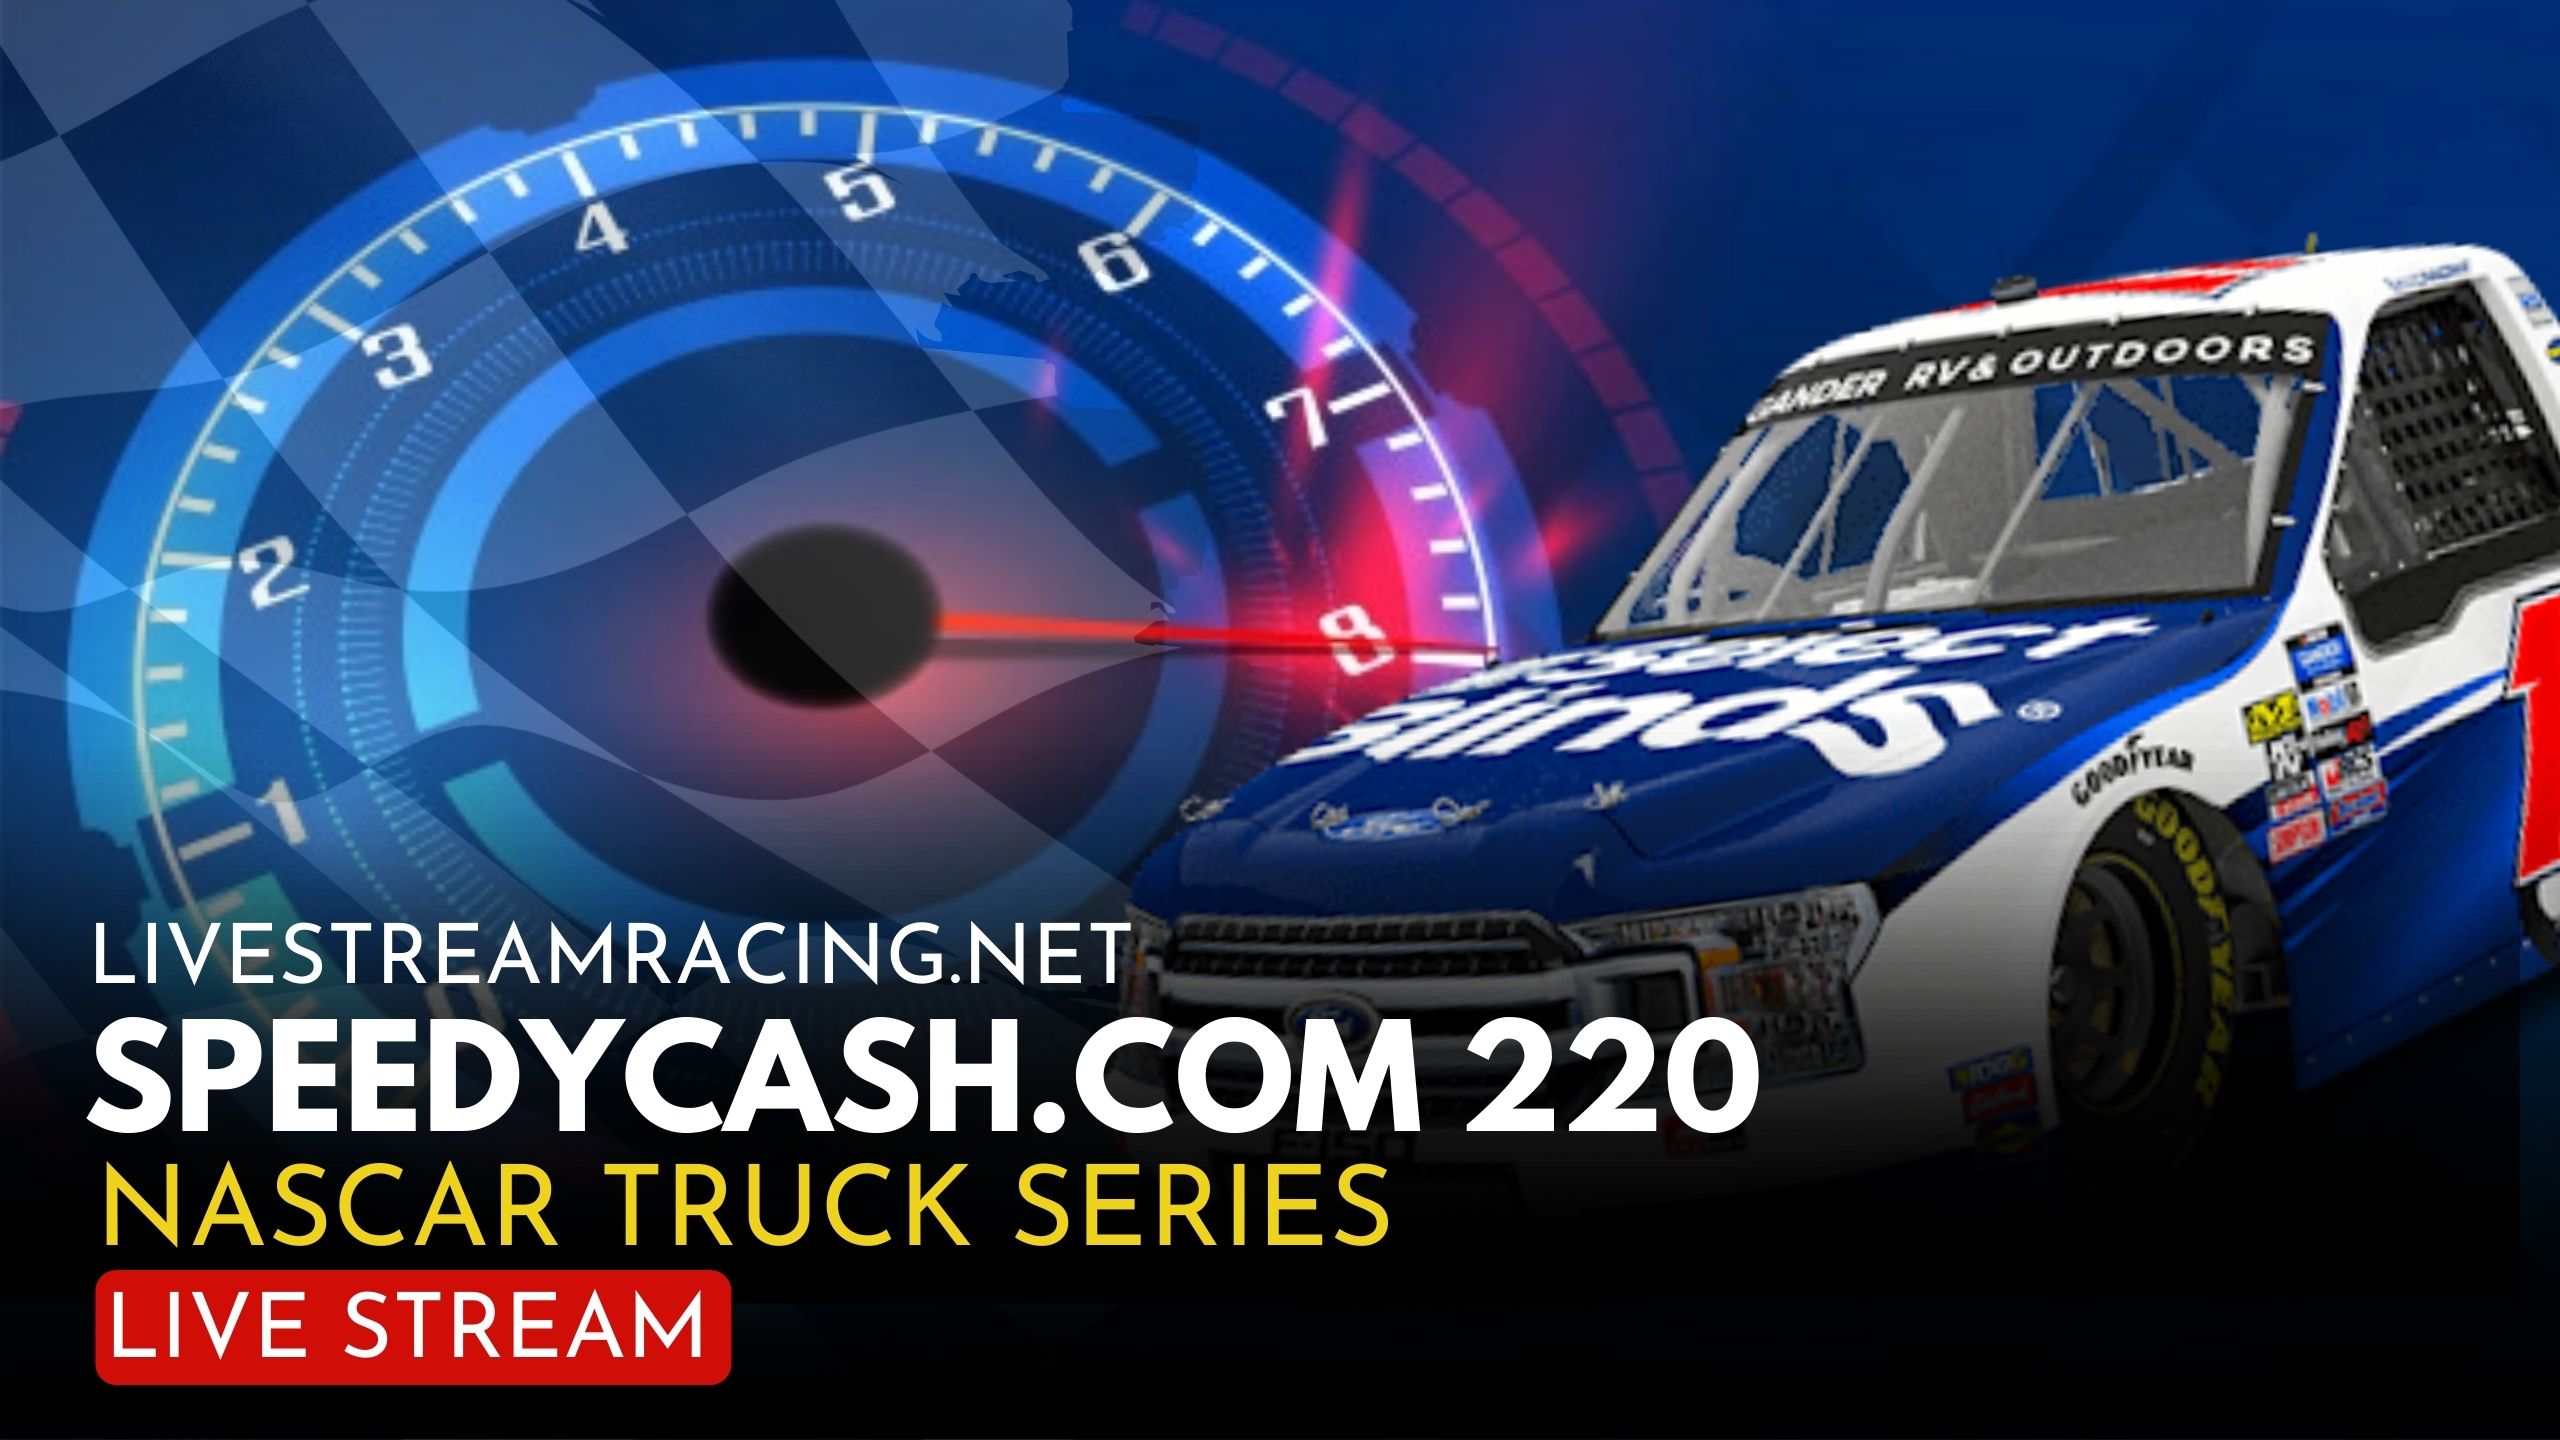 nascar-truck-series-speedycash-220-live-streaming